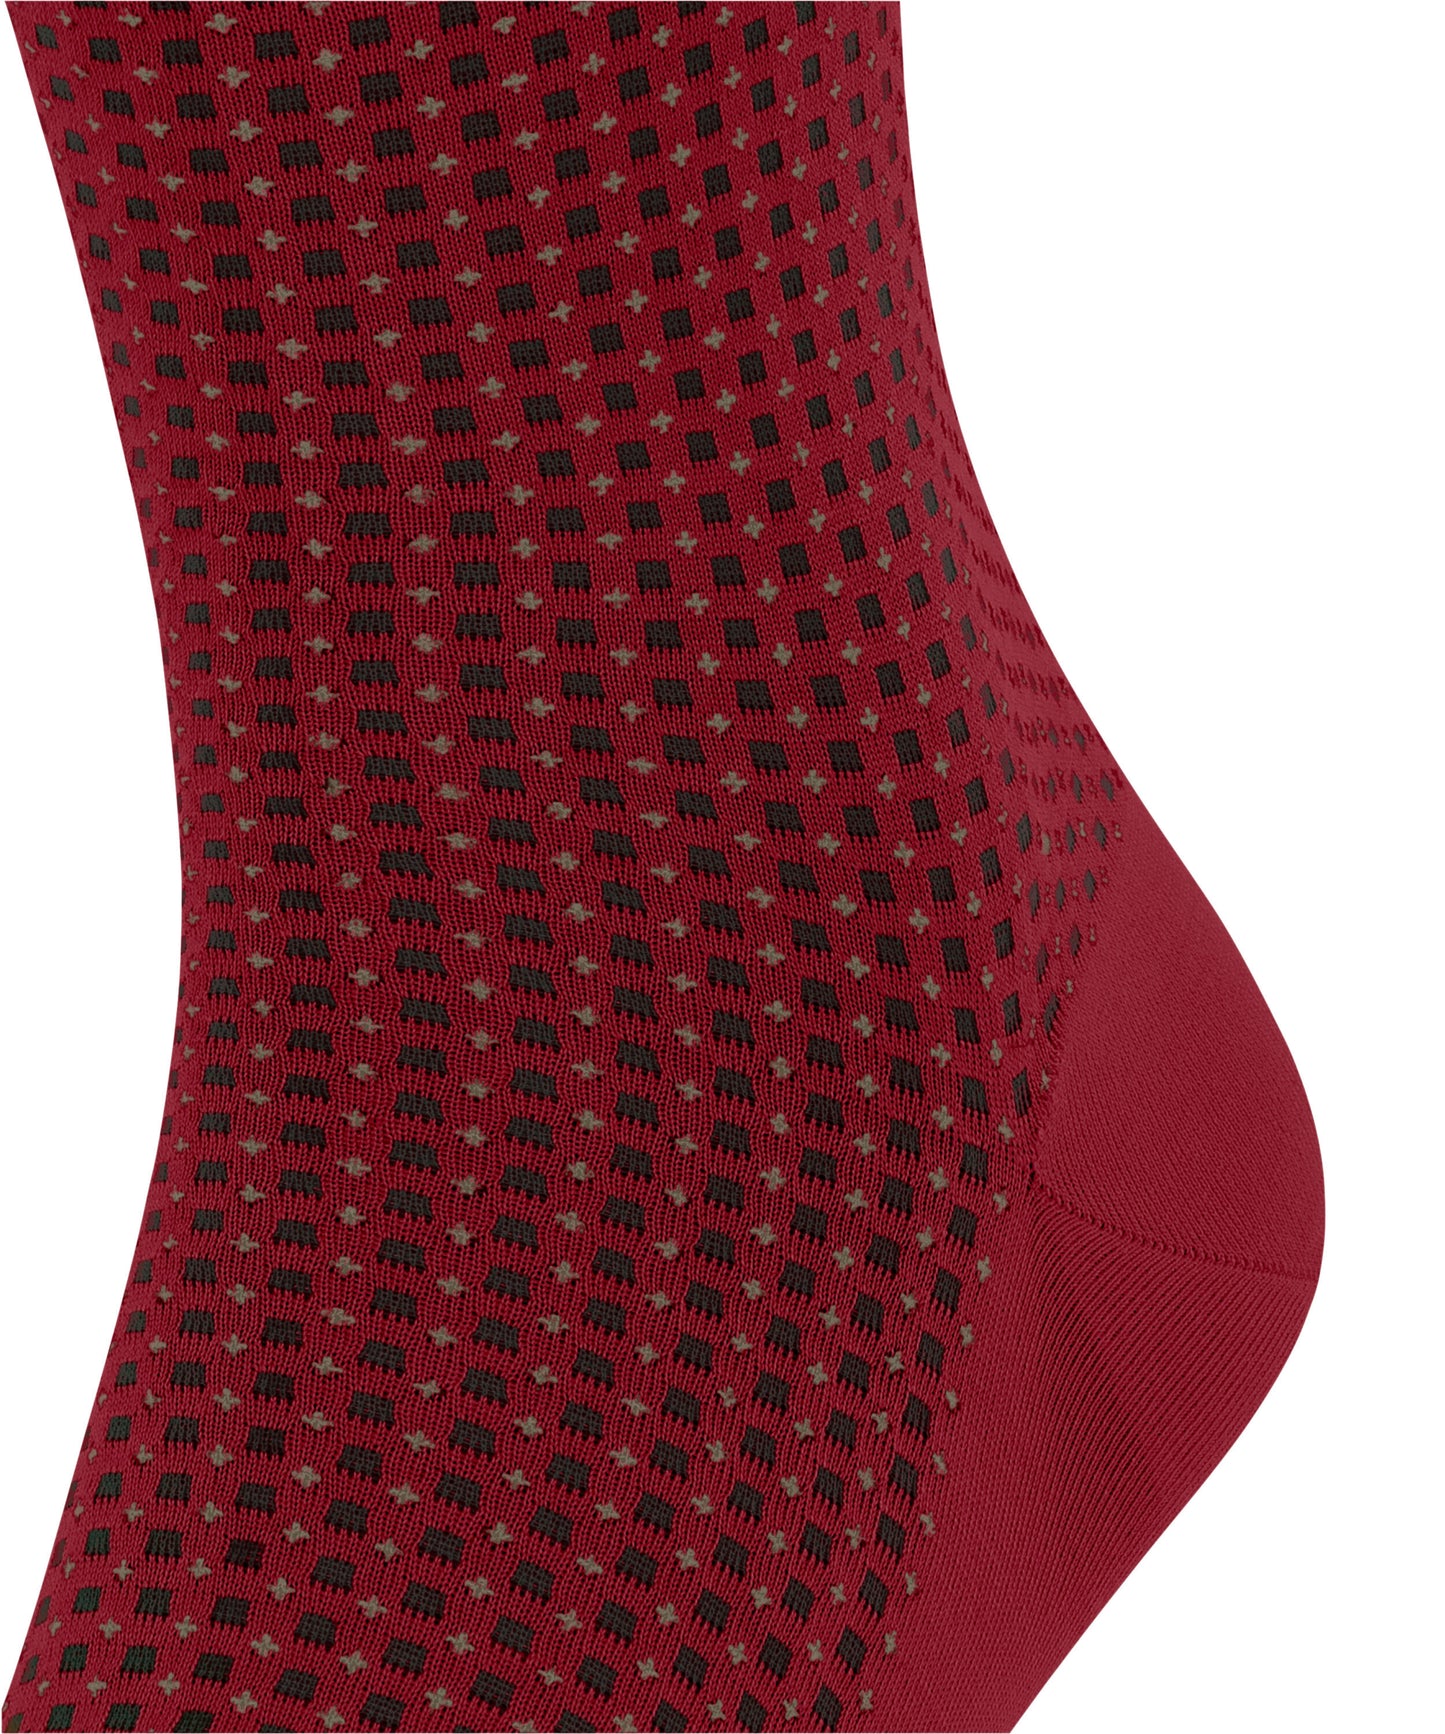 Socken Uptown Tie (Scarlet)